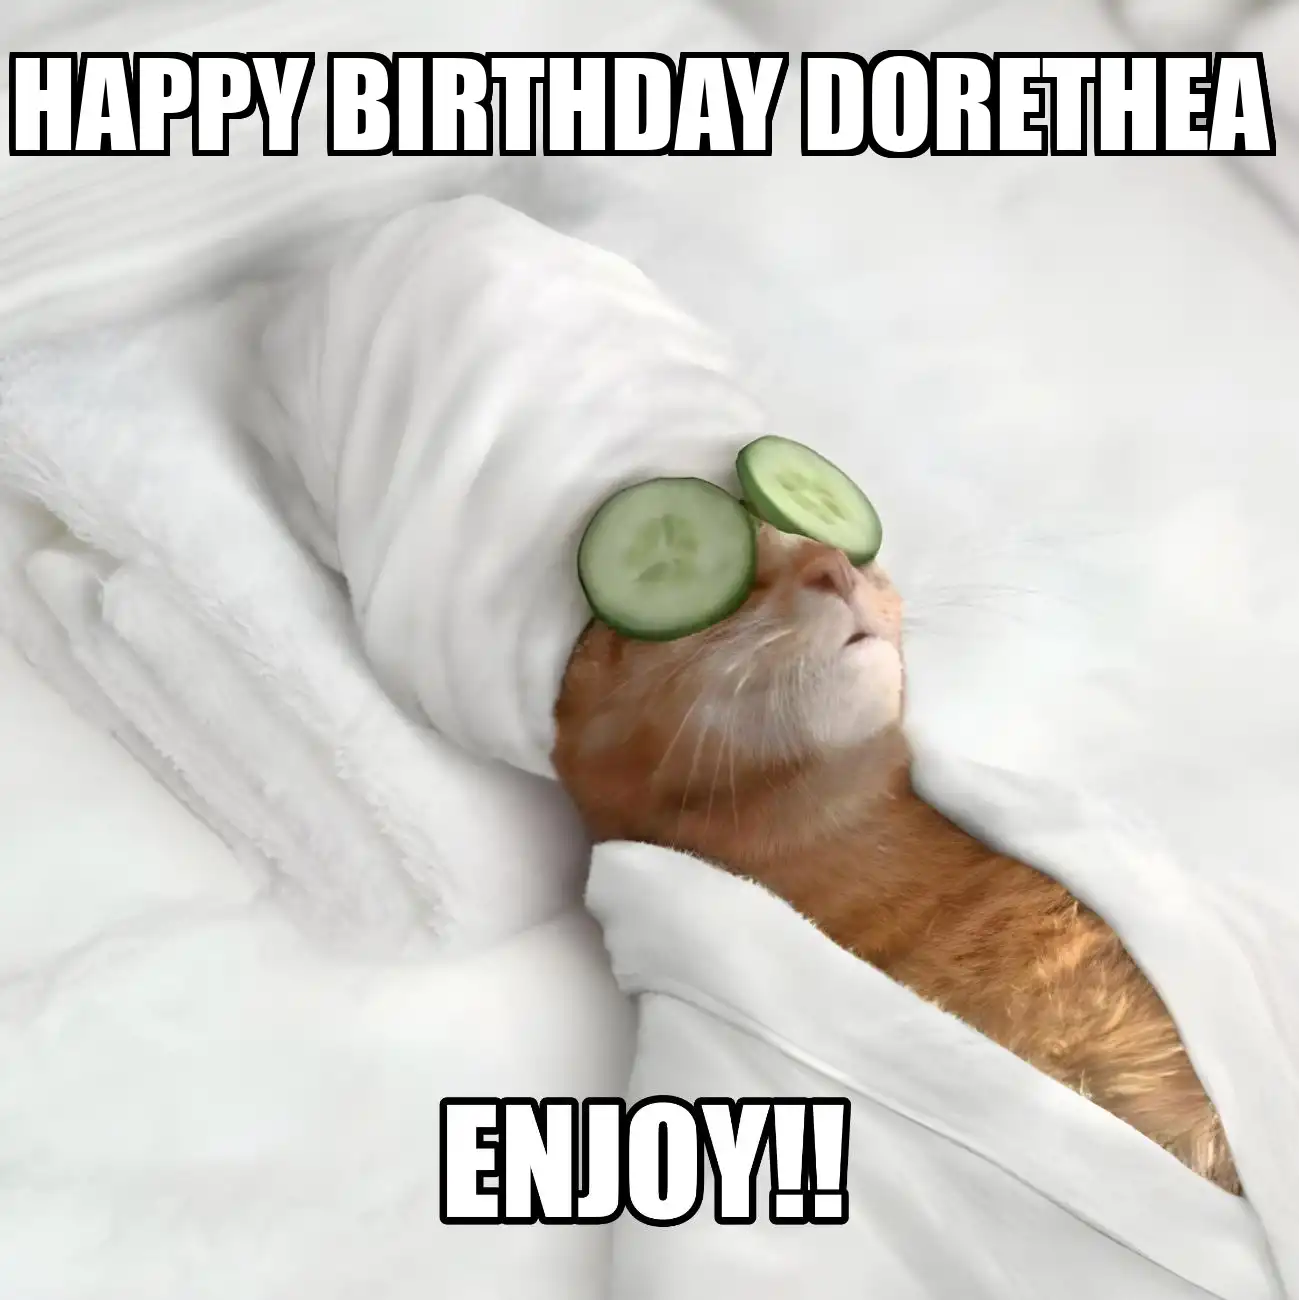 Happy Birthday Dorethea Enjoy Cat Meme